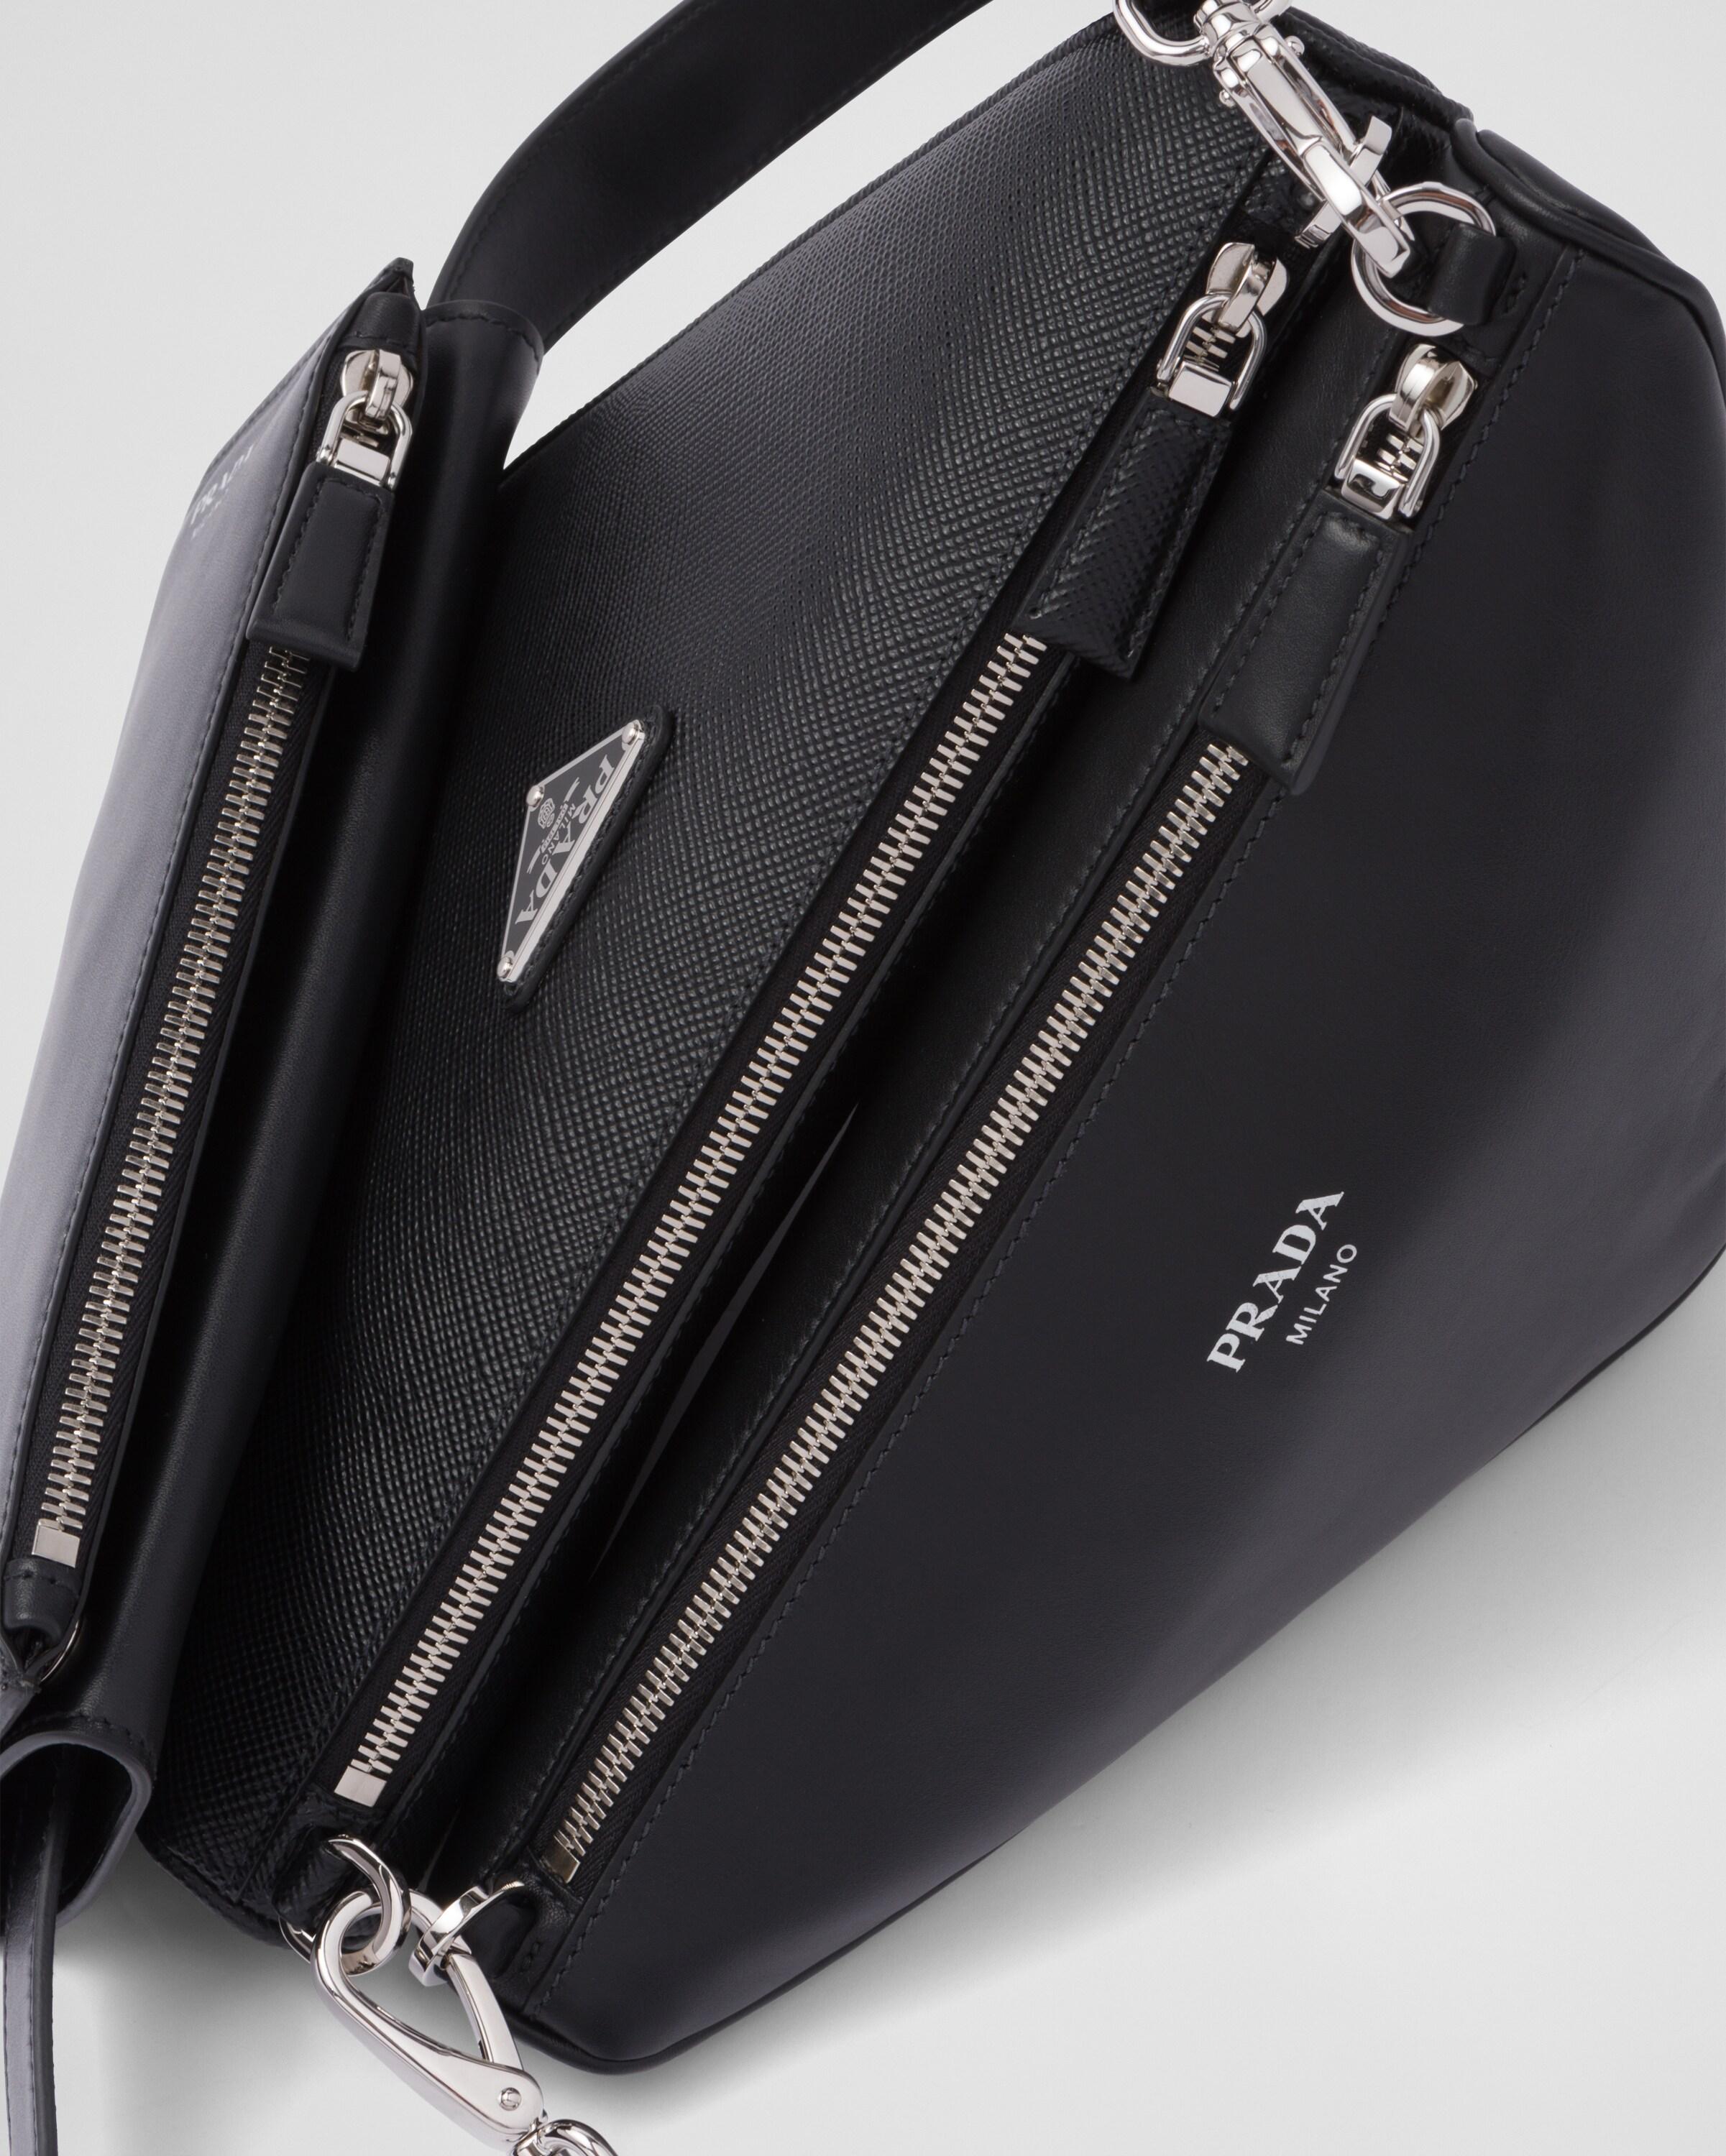 Saffiano Leather Shoulder Bag in Black - Prada